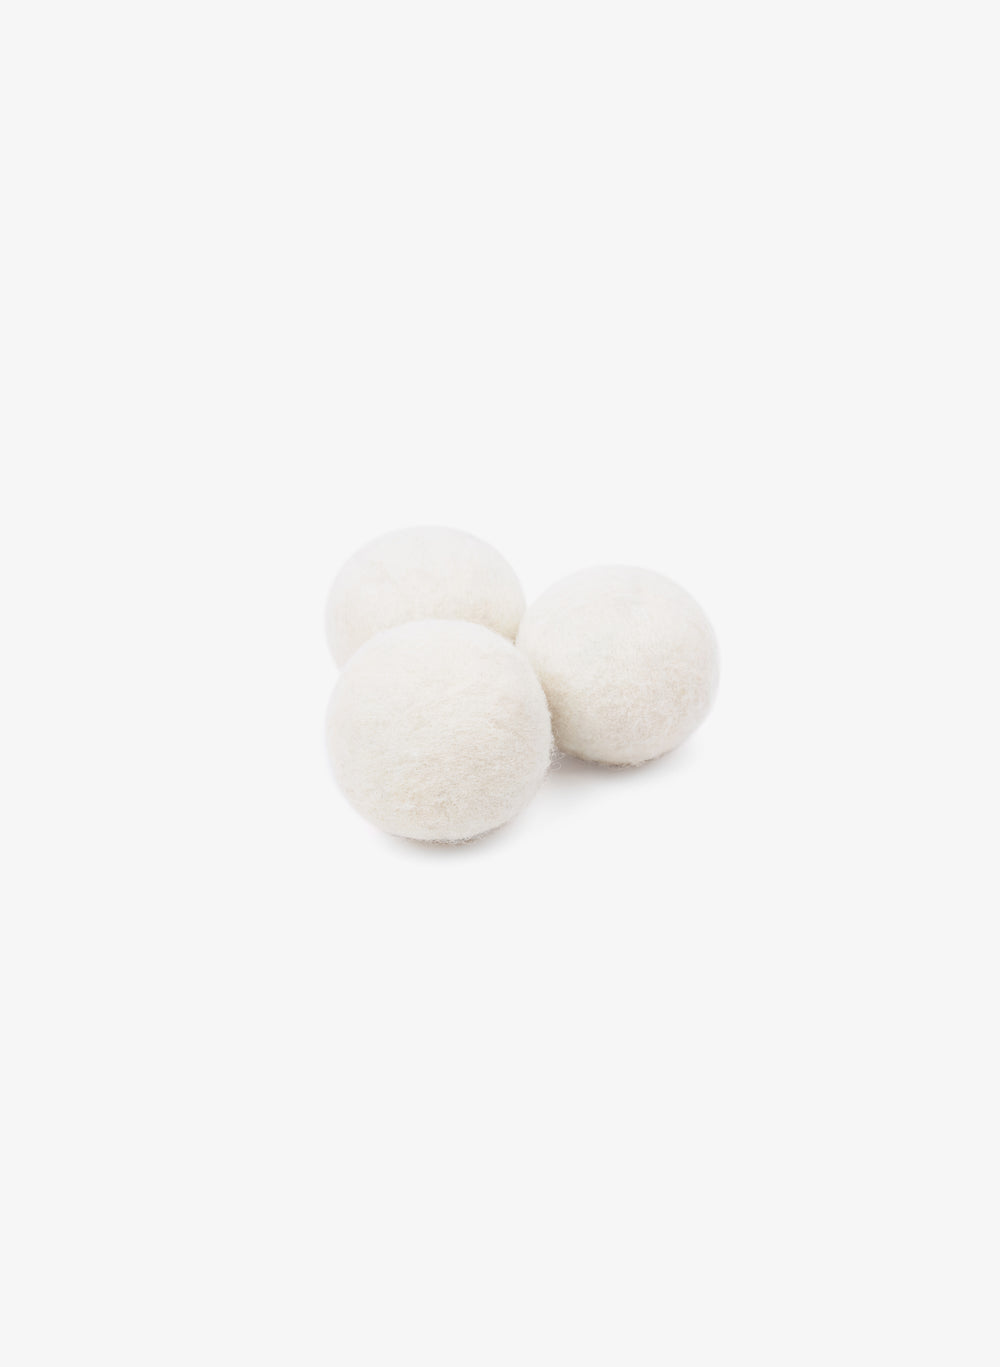 Dryer Balls - White